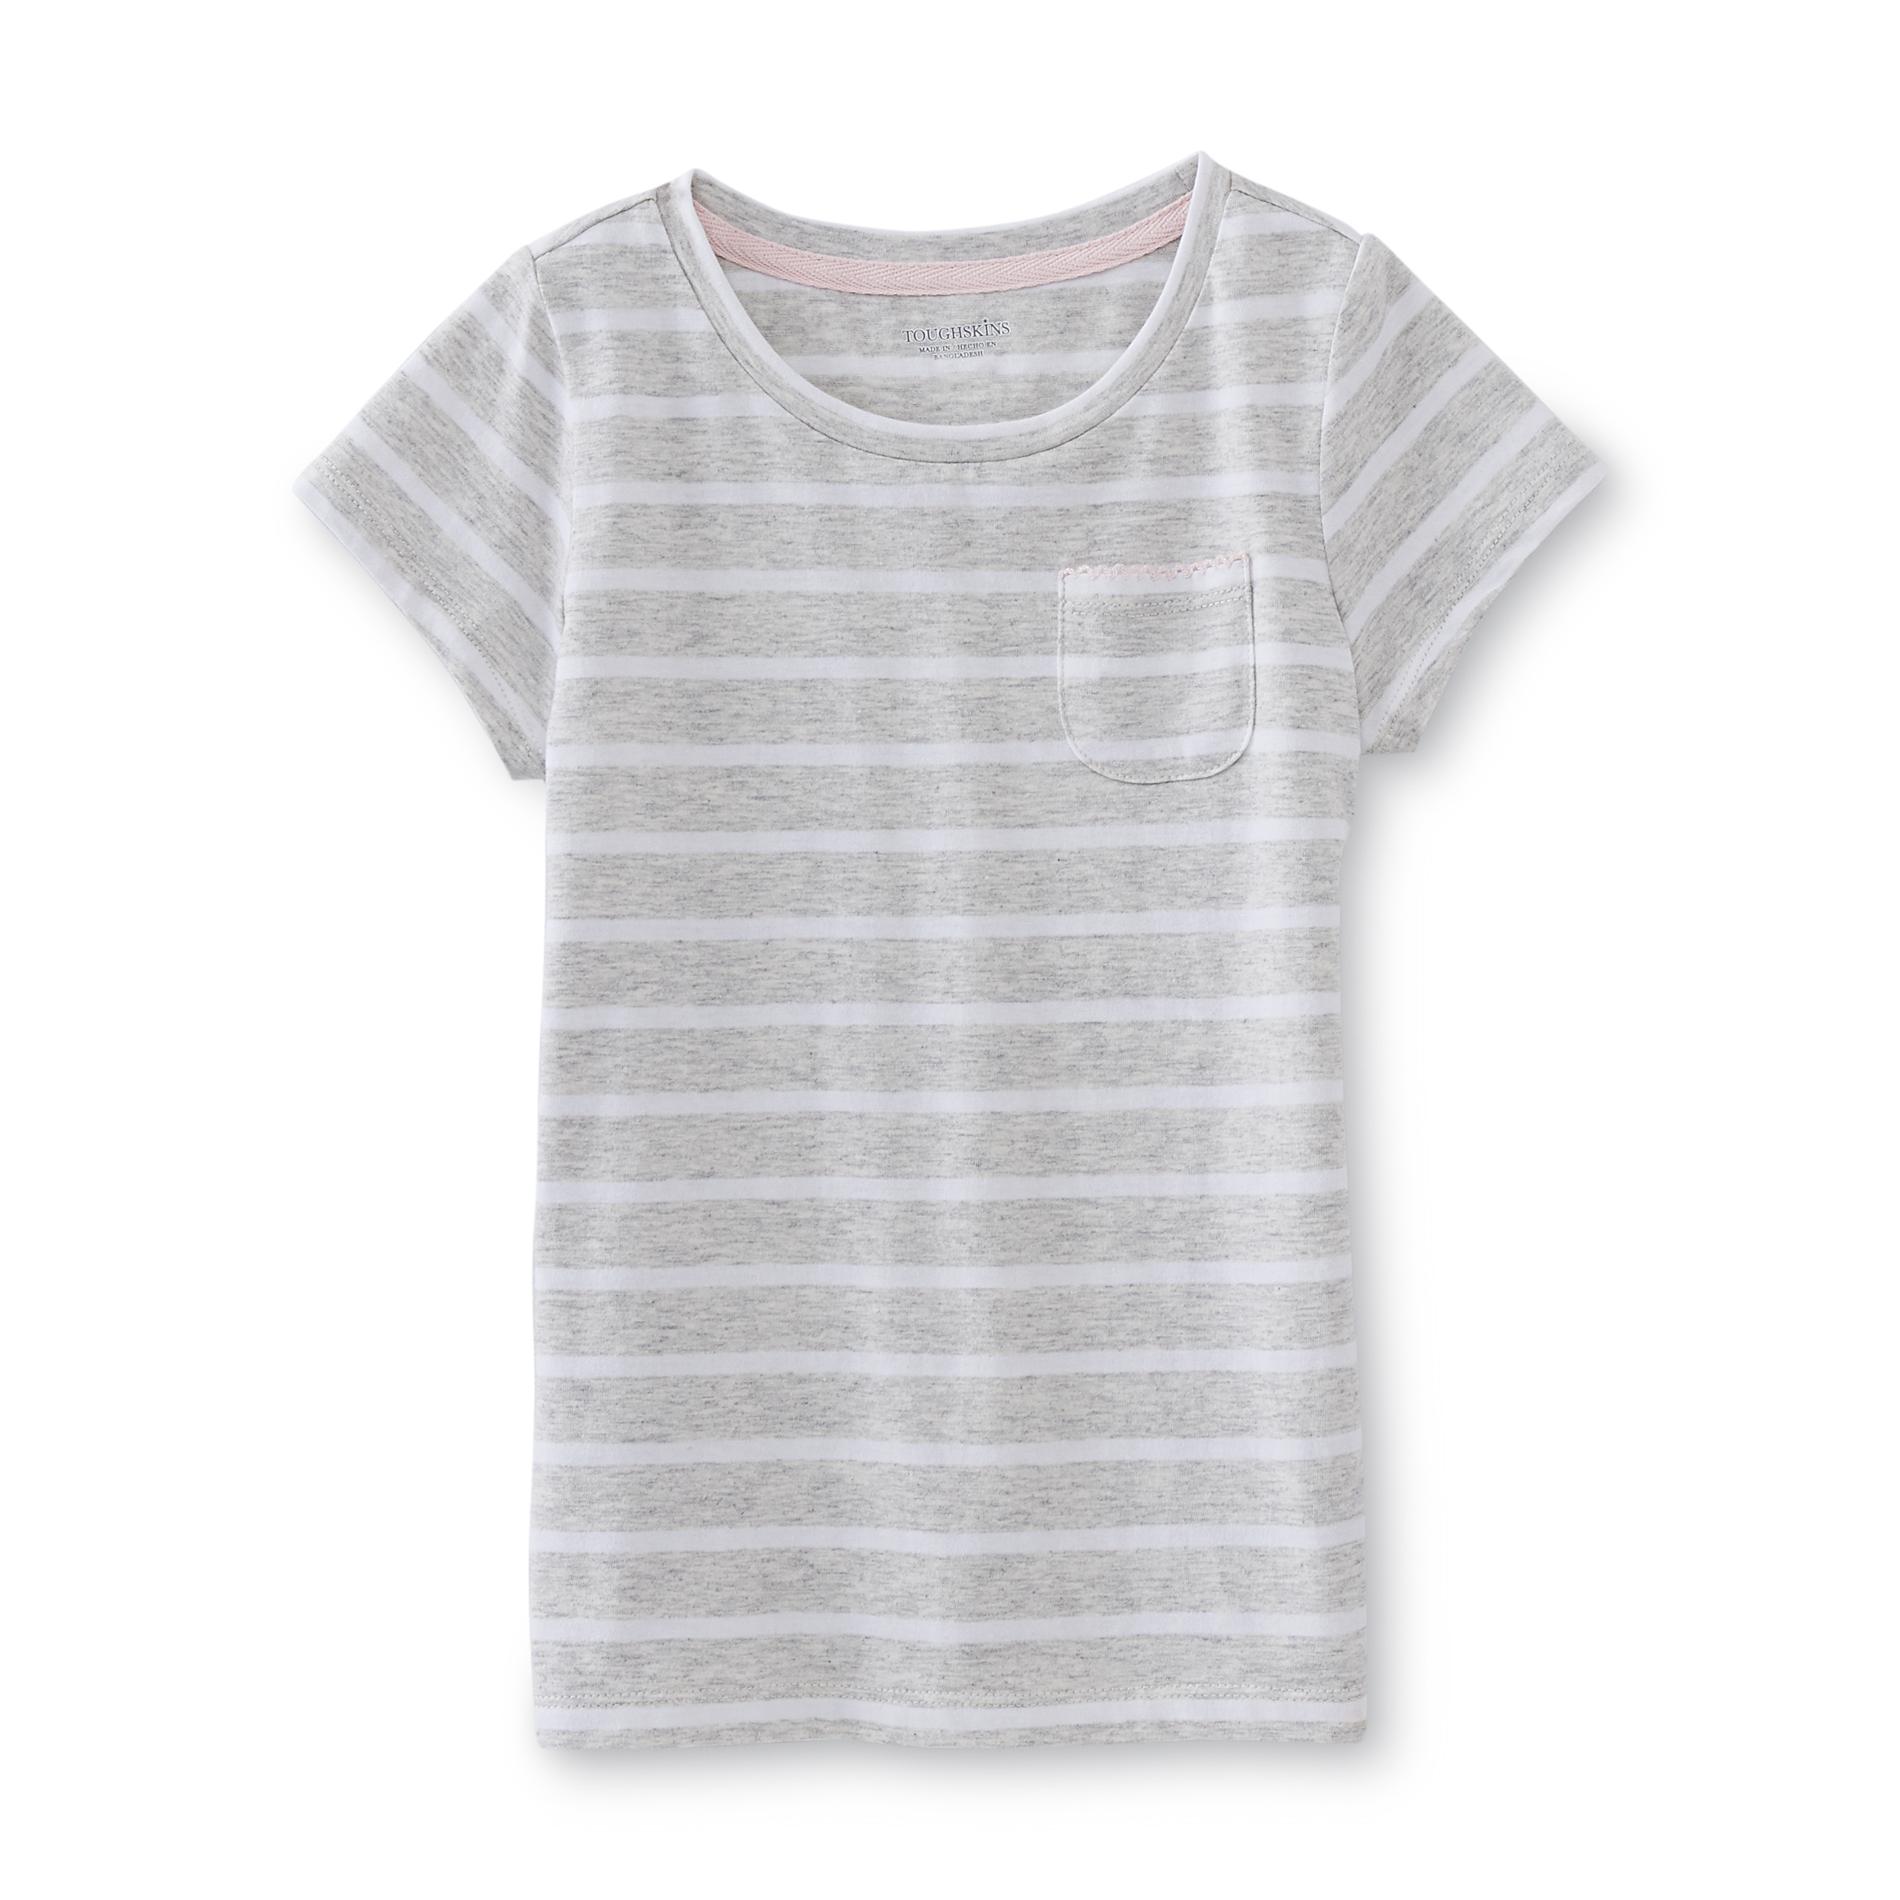 Toughskins Infant & Toddler Girl's T-Shirt - Striped